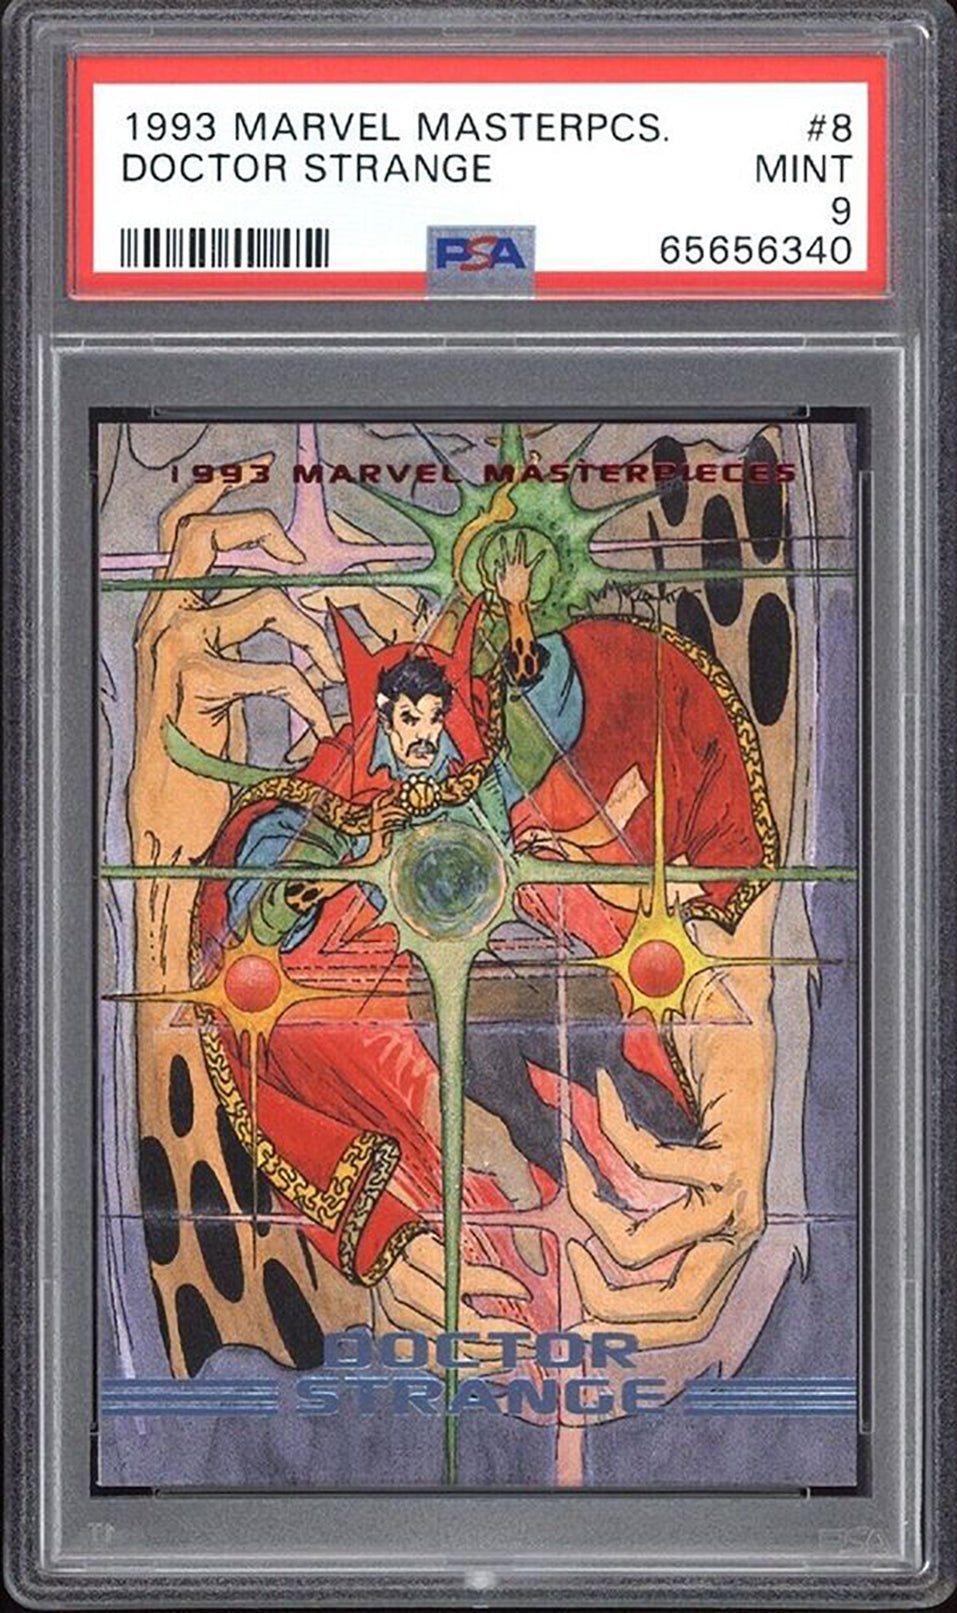 DOCTOR STRANGE PSA 9 1993 Marvel Masterpieces #8 Marvel Base Graded Cards - Hobby Gems